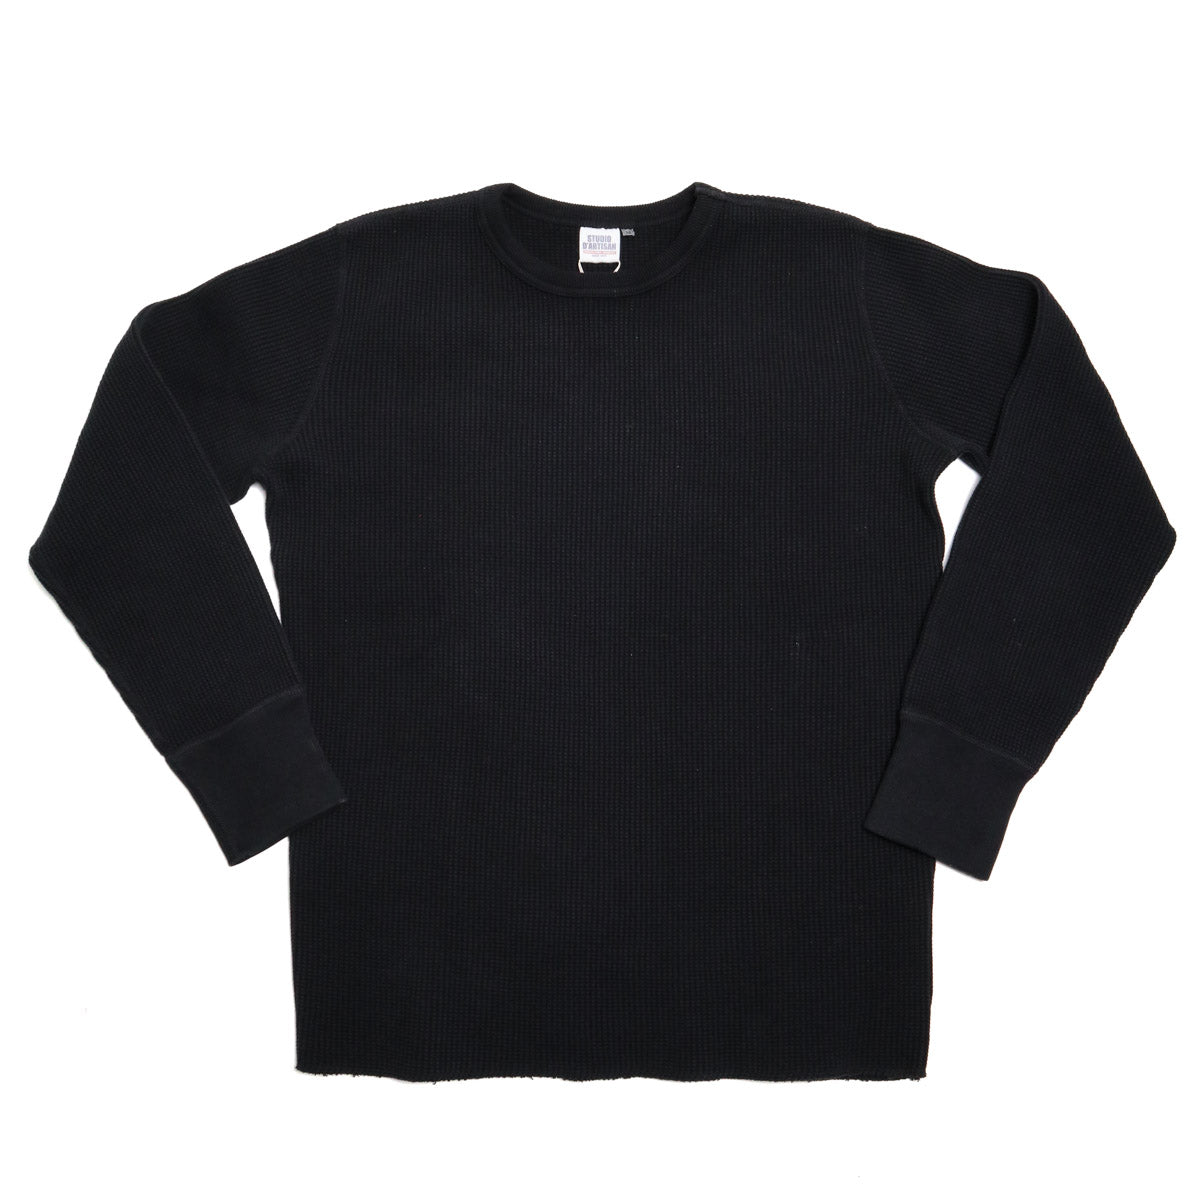 9936 Heavy Thermal Shirt Black